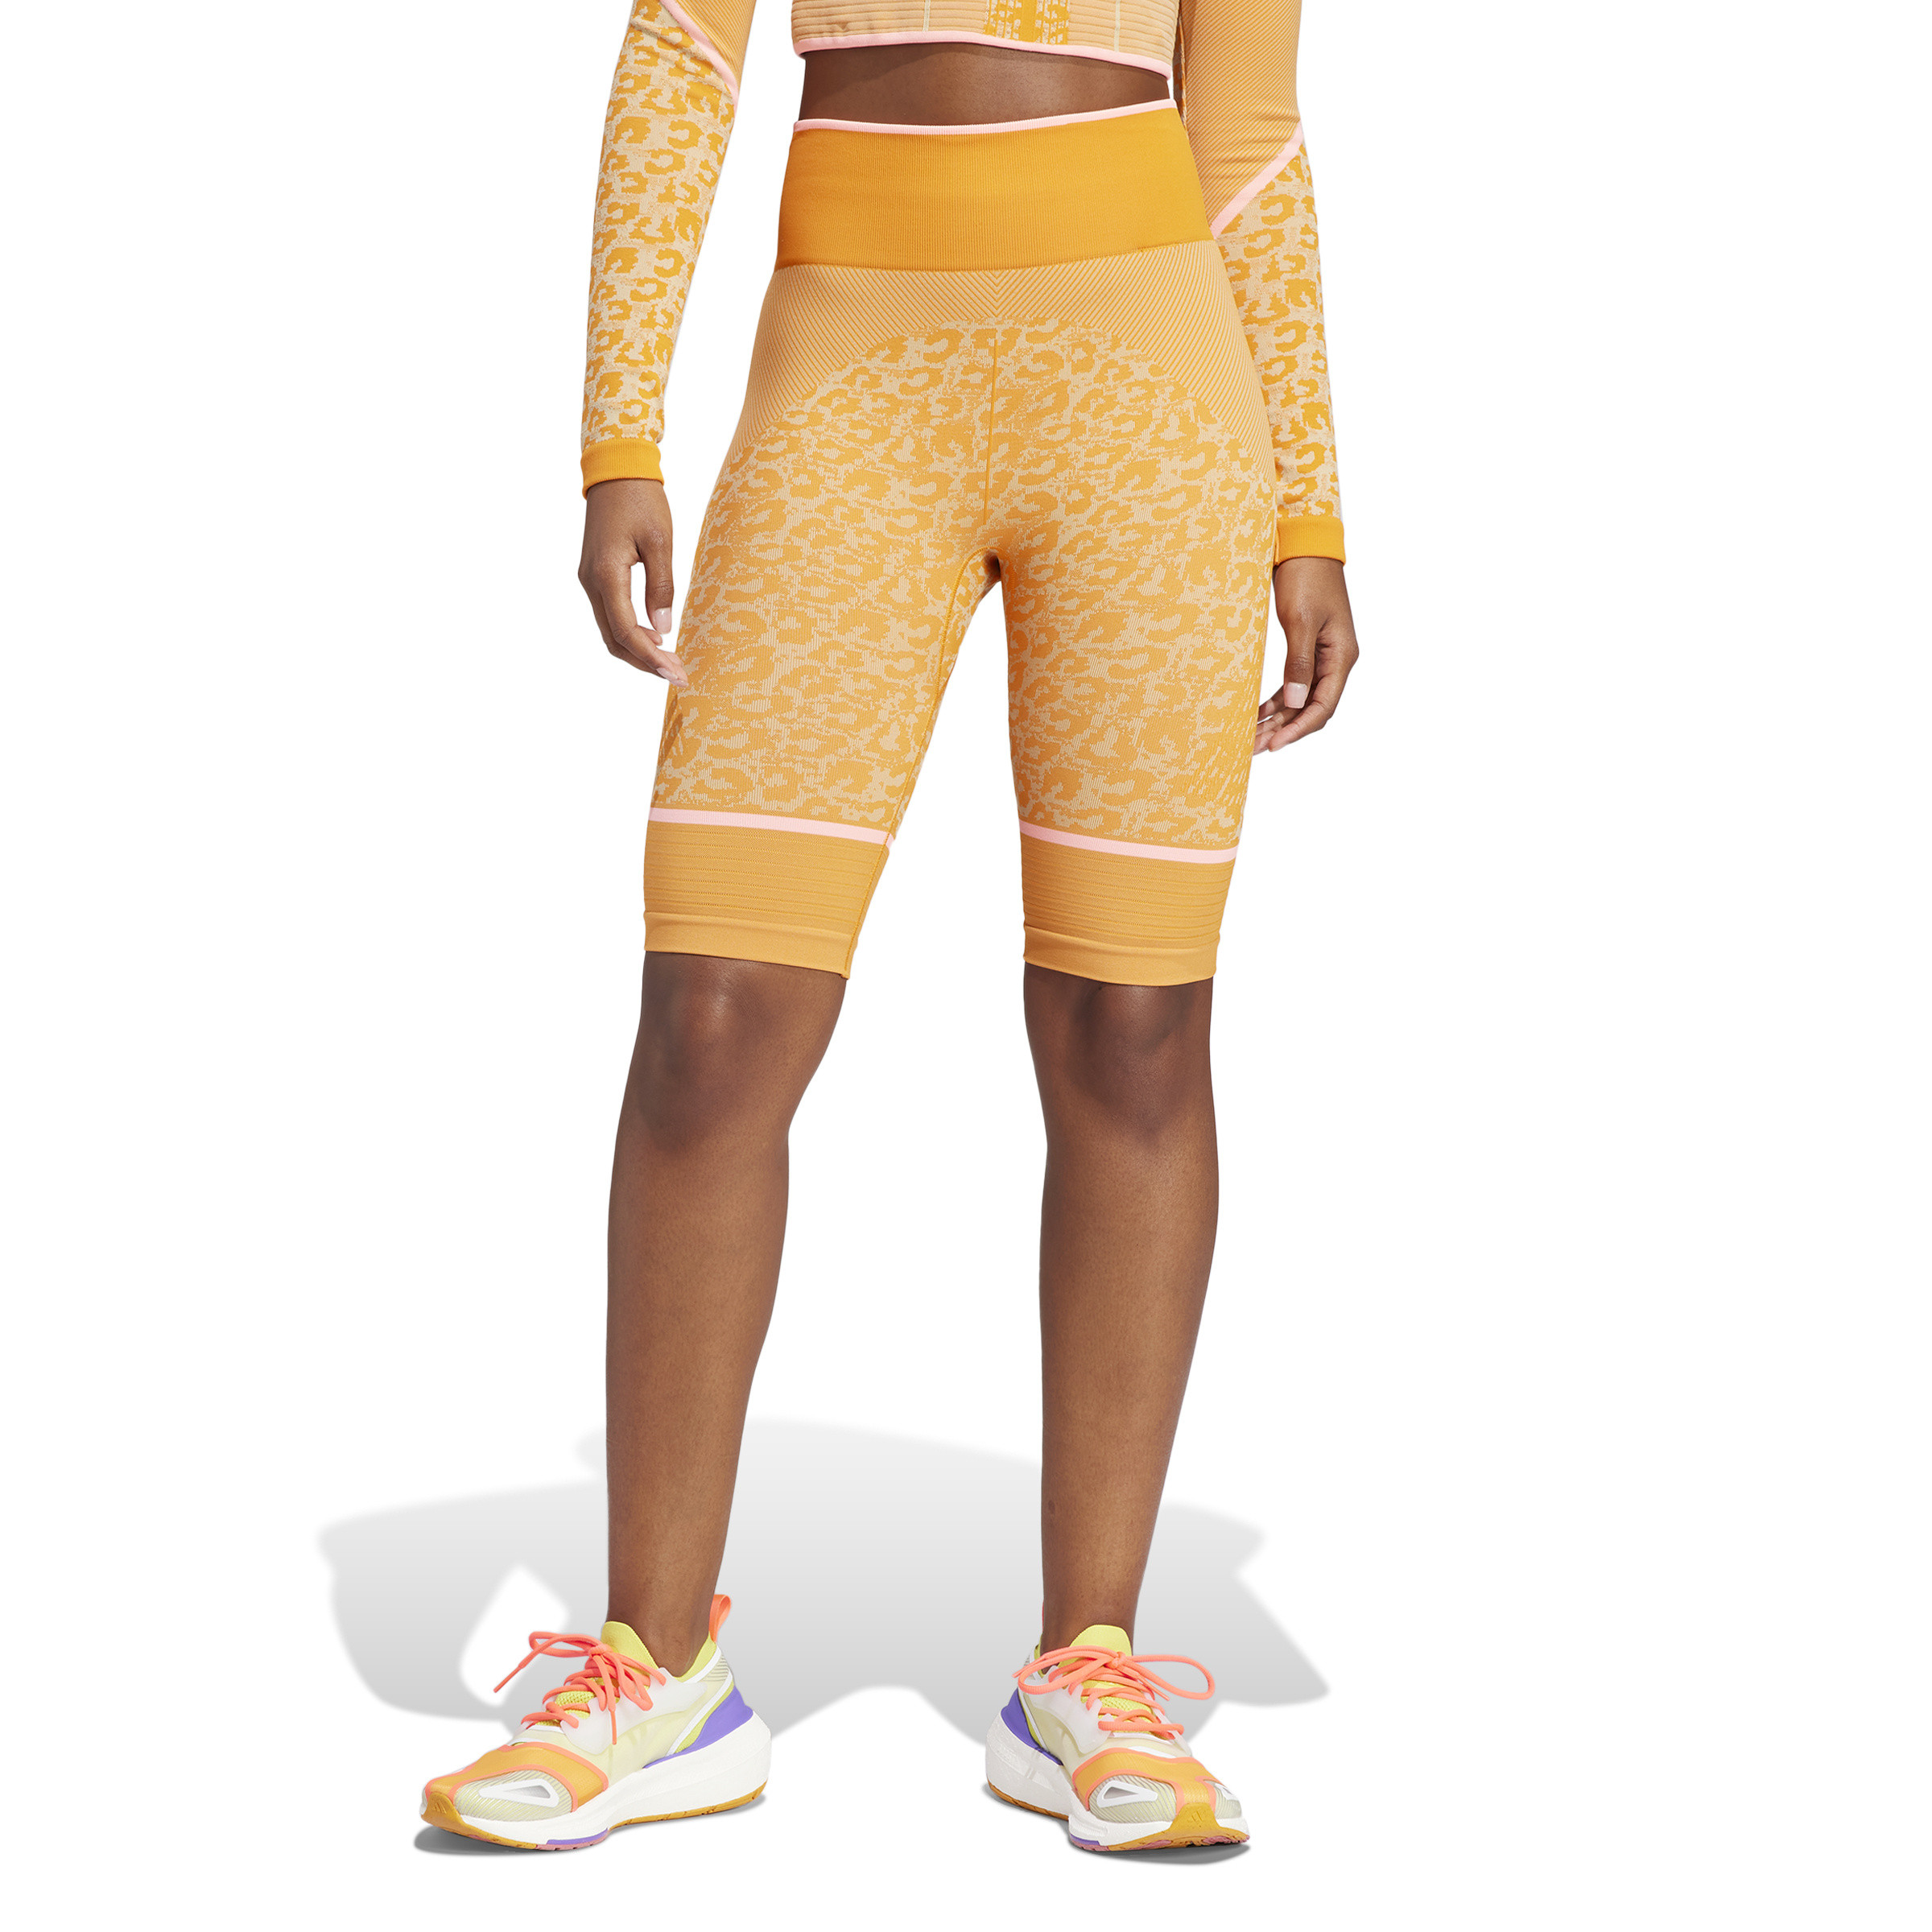 Adidas by Stella McCartney - TrueStrength Seamless Bike Yoga Leggings, Orange, large image number 3